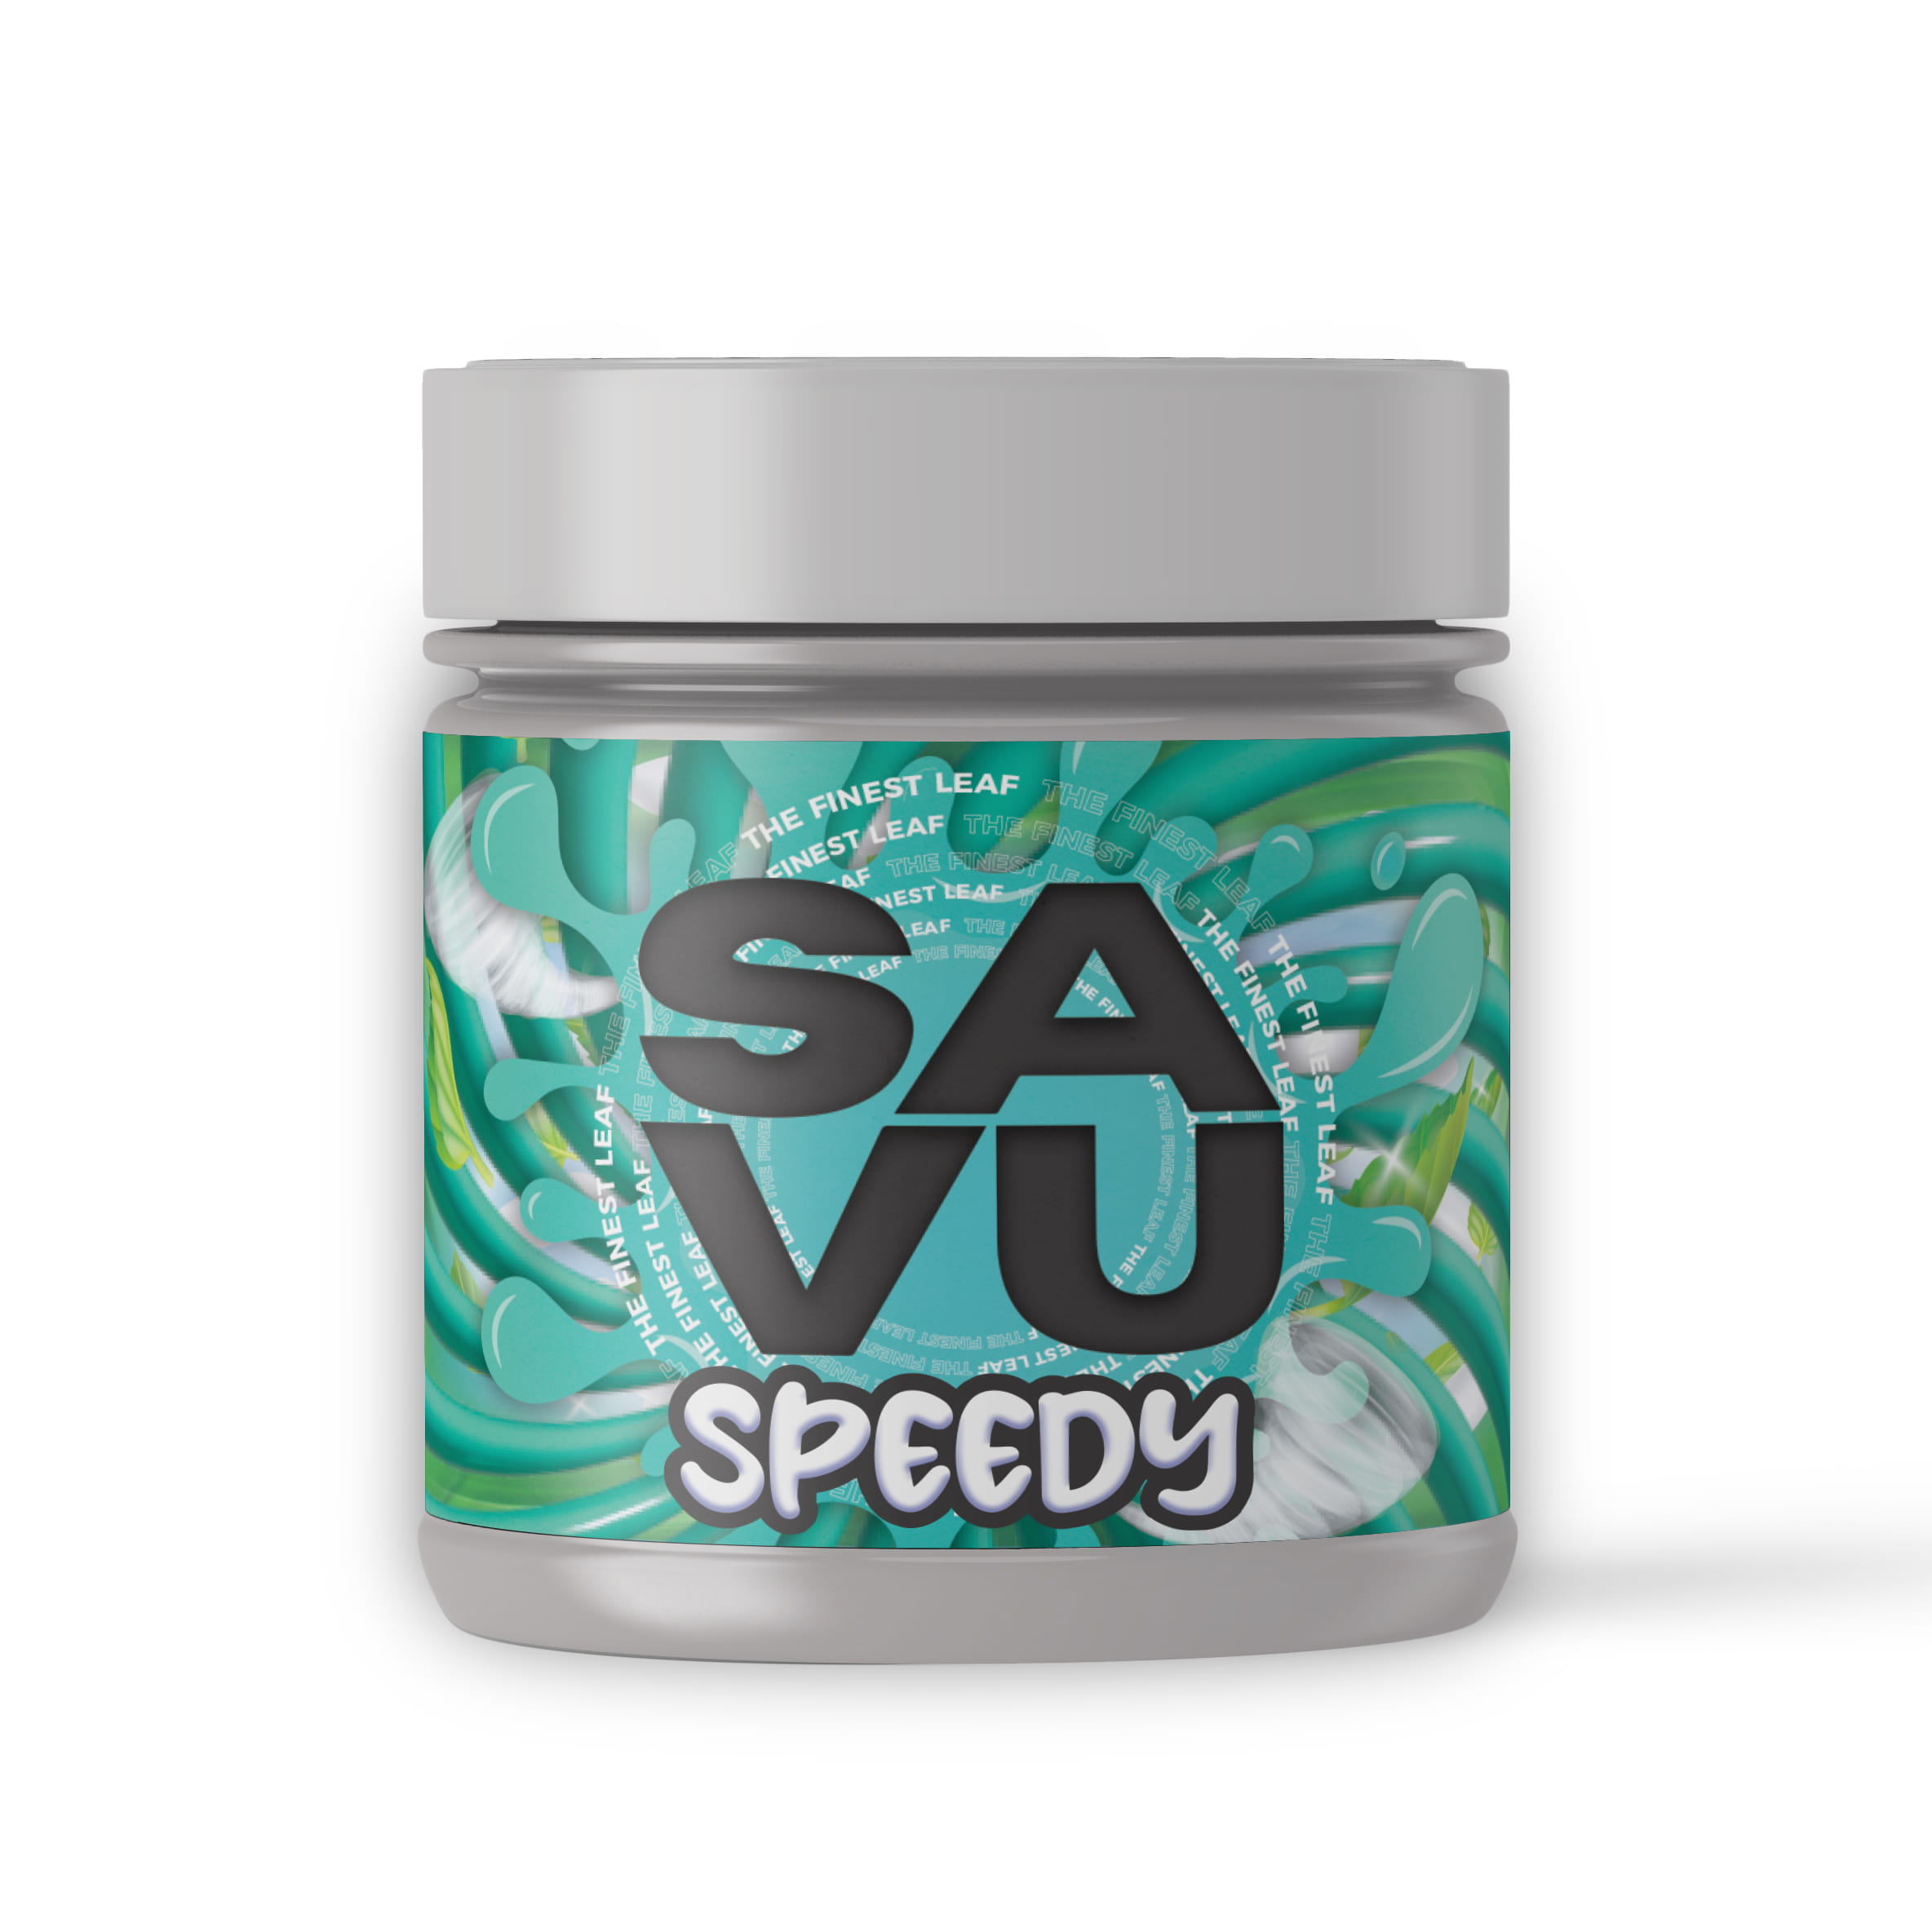 Savu Tobacco - Speedy 25g